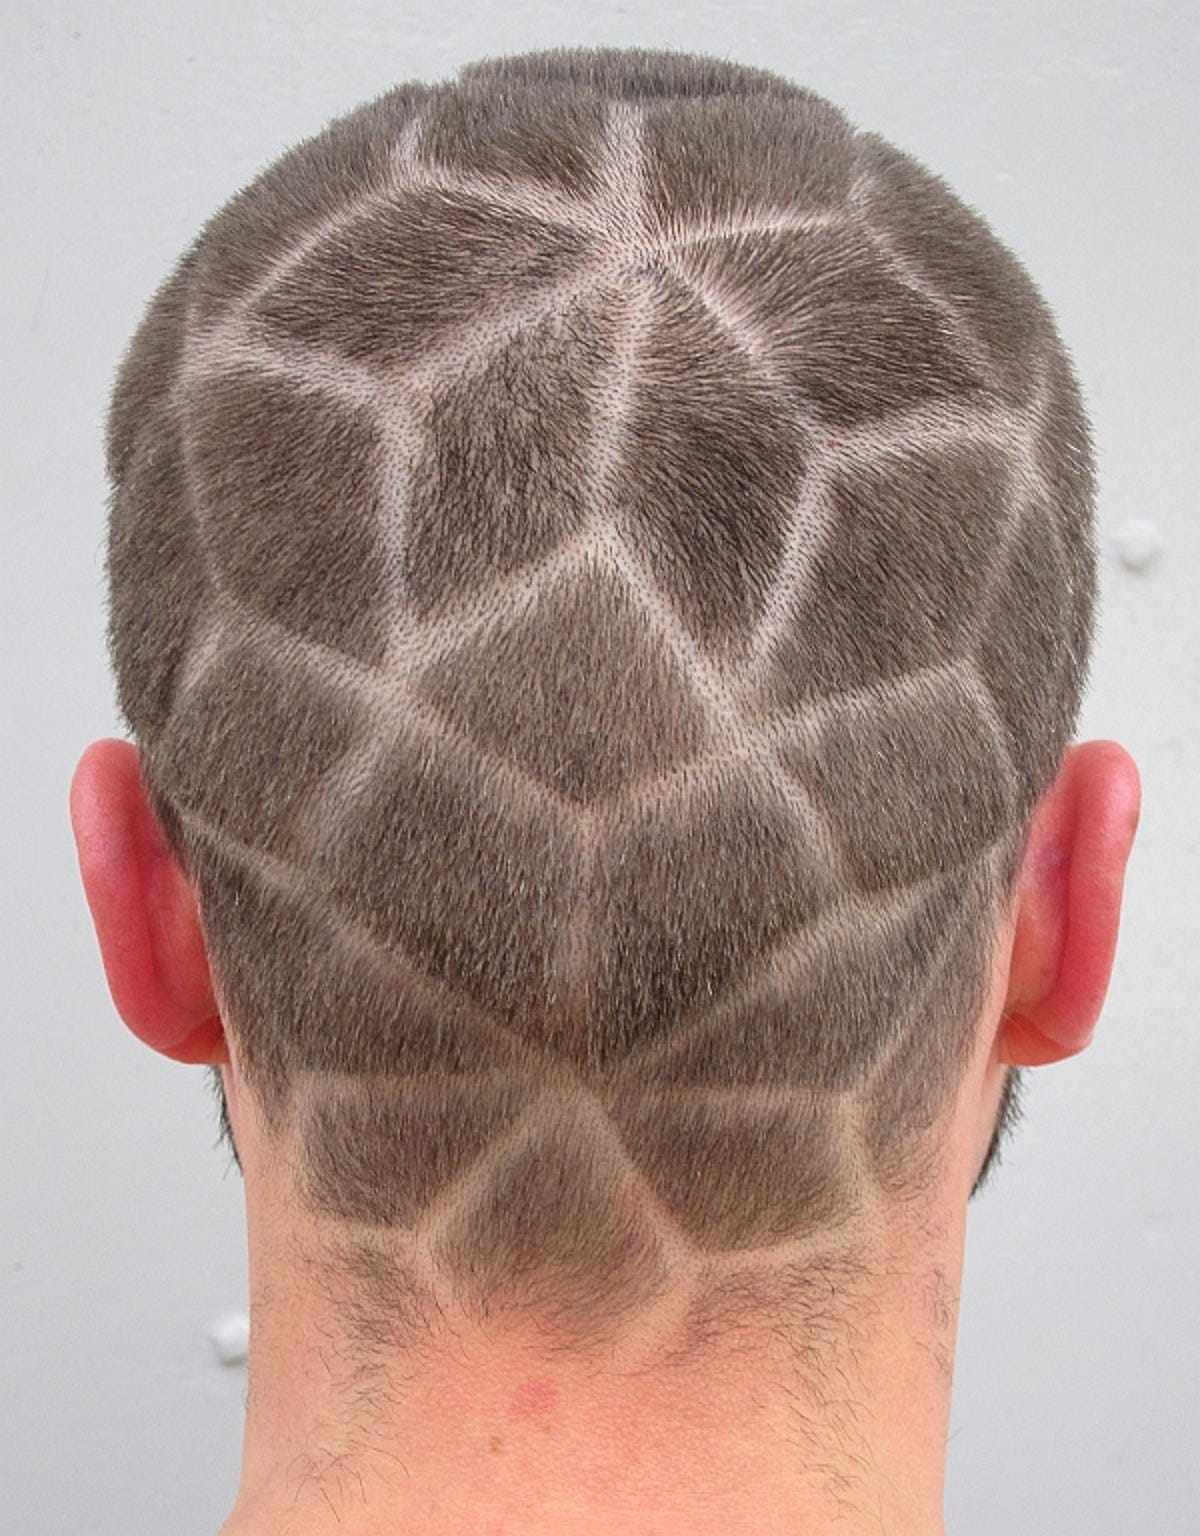 A back view of Nick Sayers' geometric haircut.